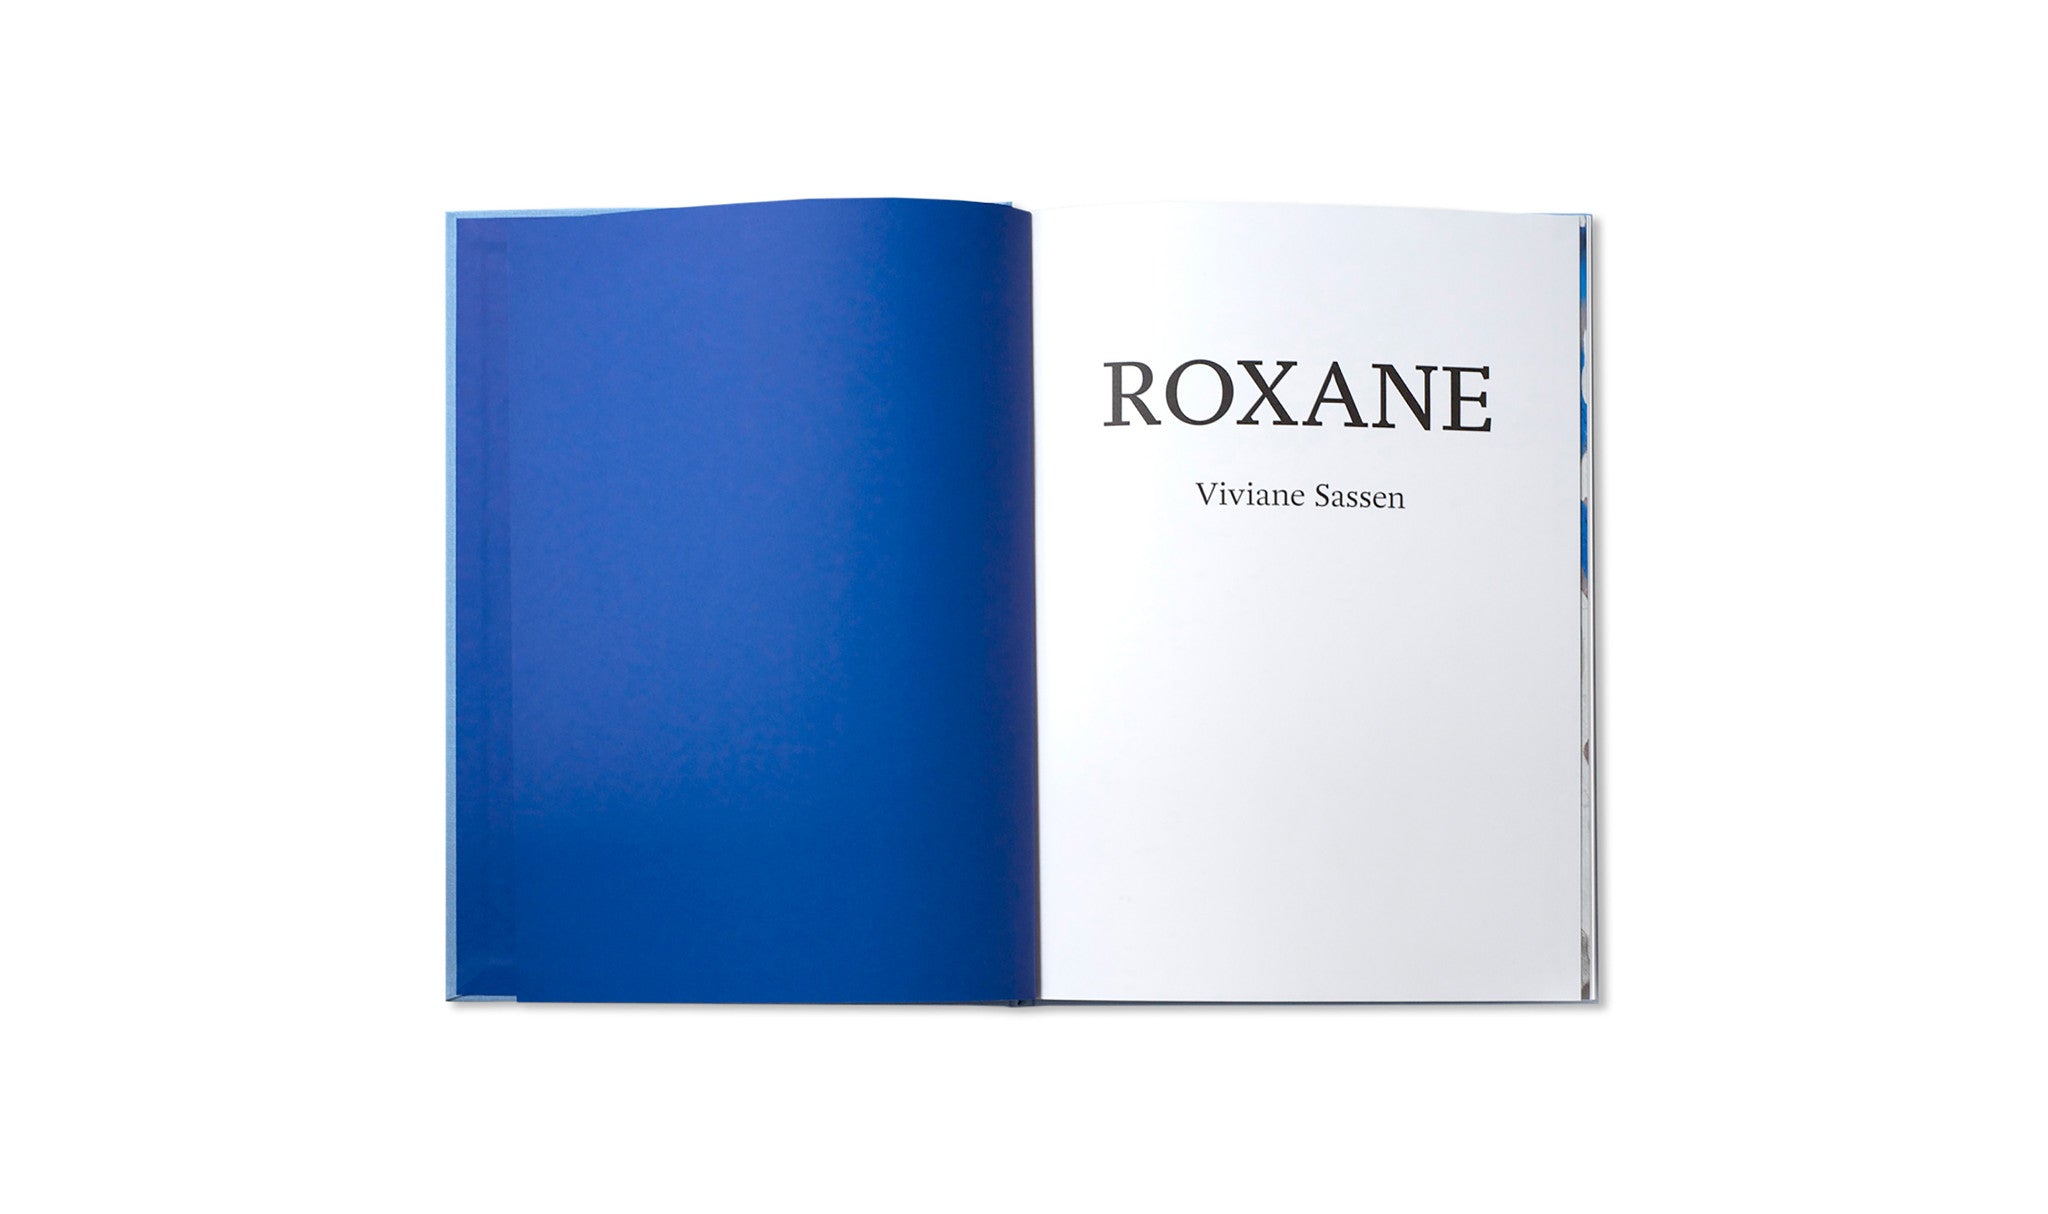 ROXANE by Viviane Sassen